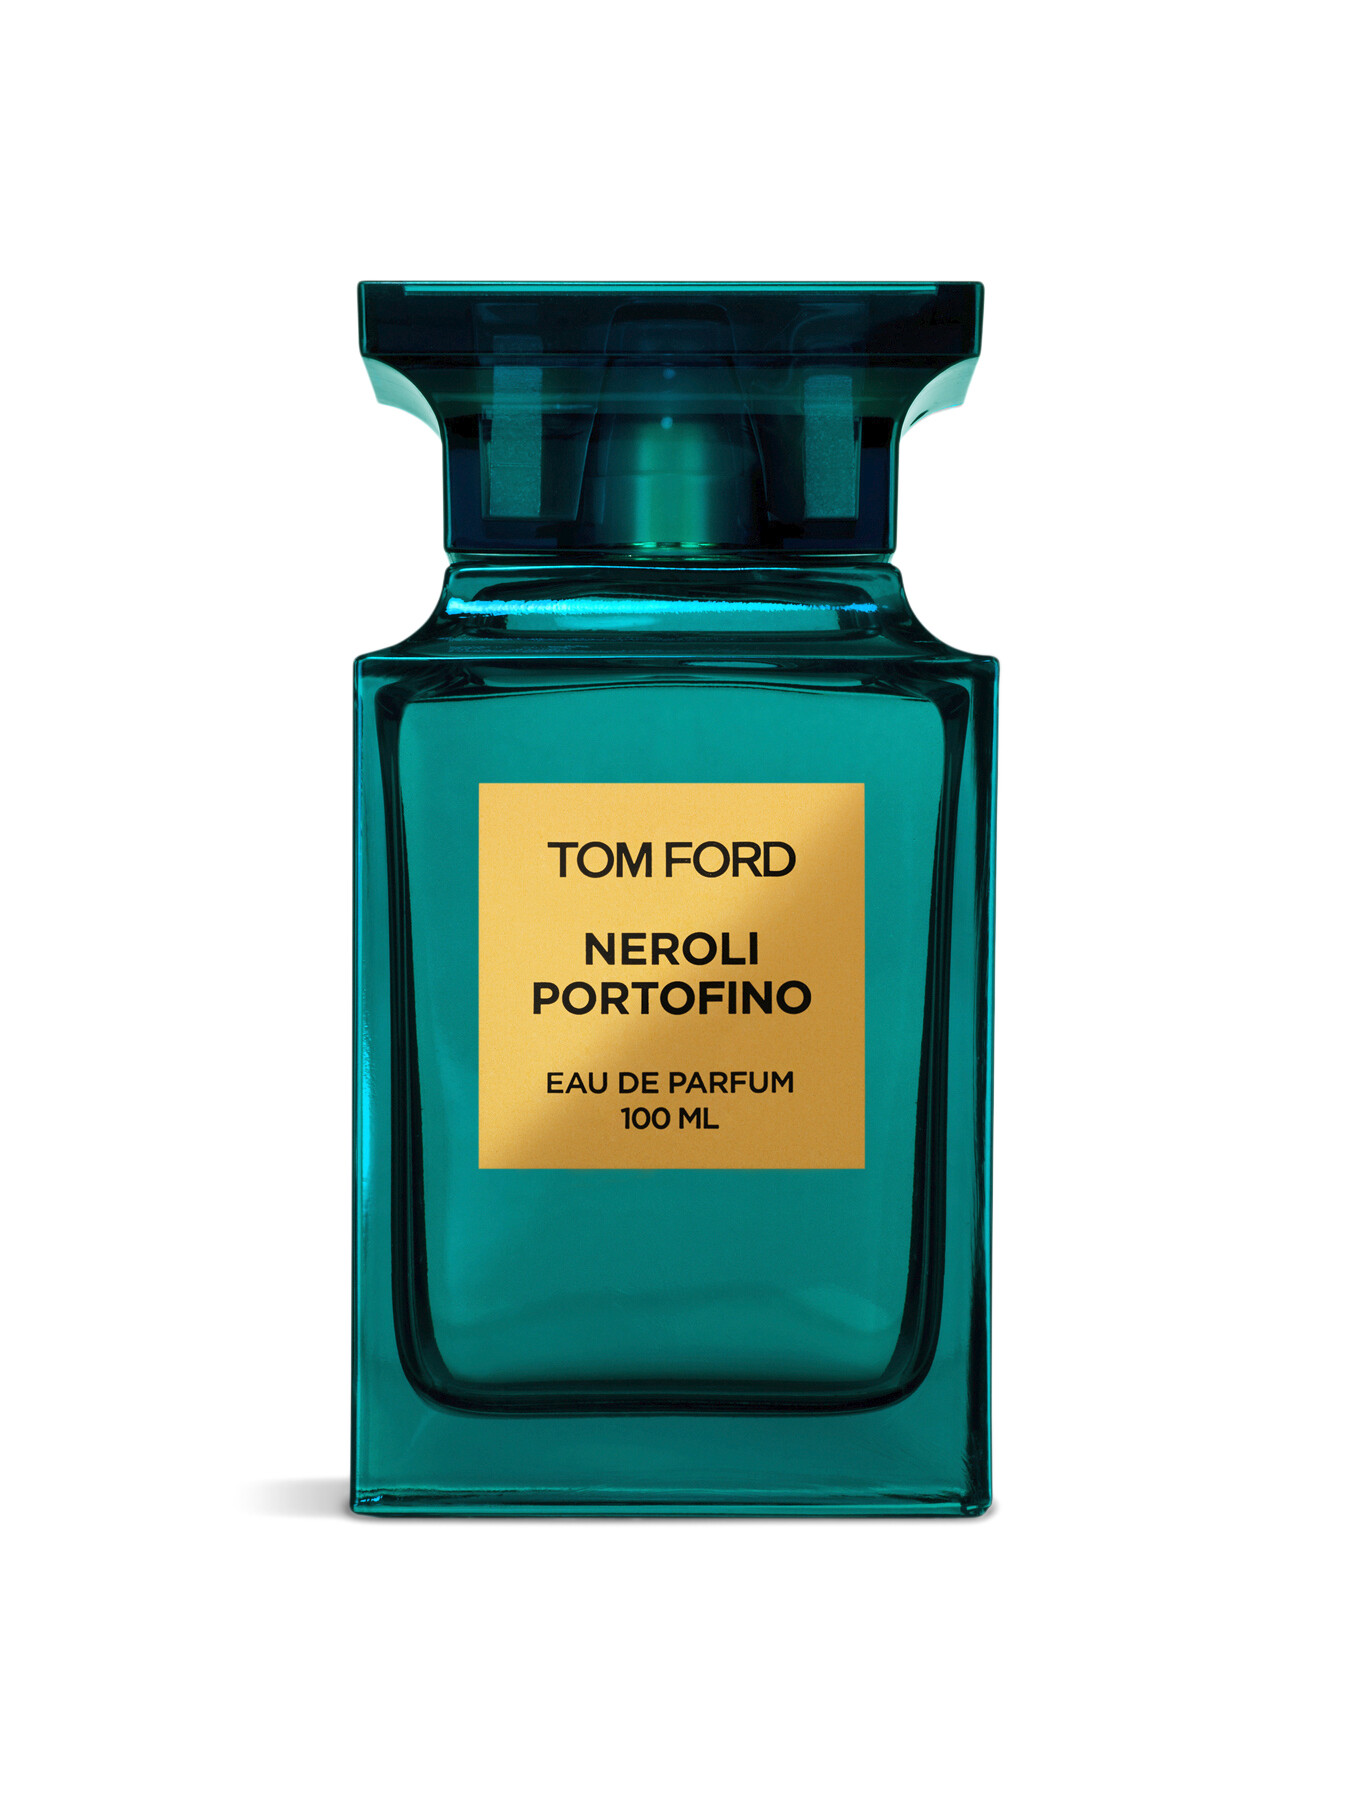 Tom Ford Neroli Portofino Eau de Parfum 100 ml | Fenwick